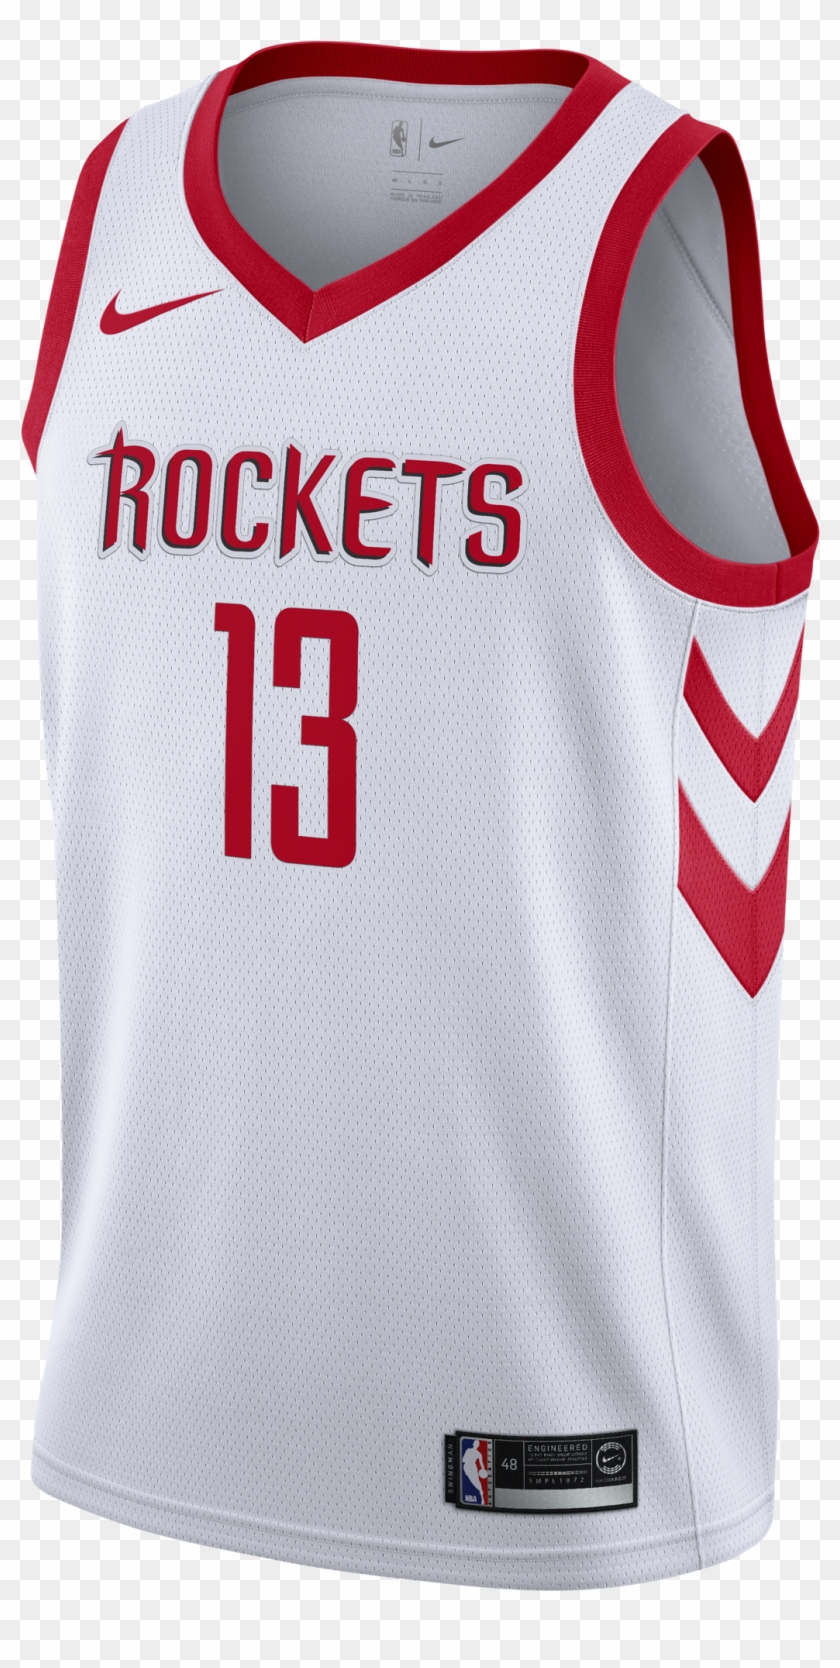 rockets white jersey